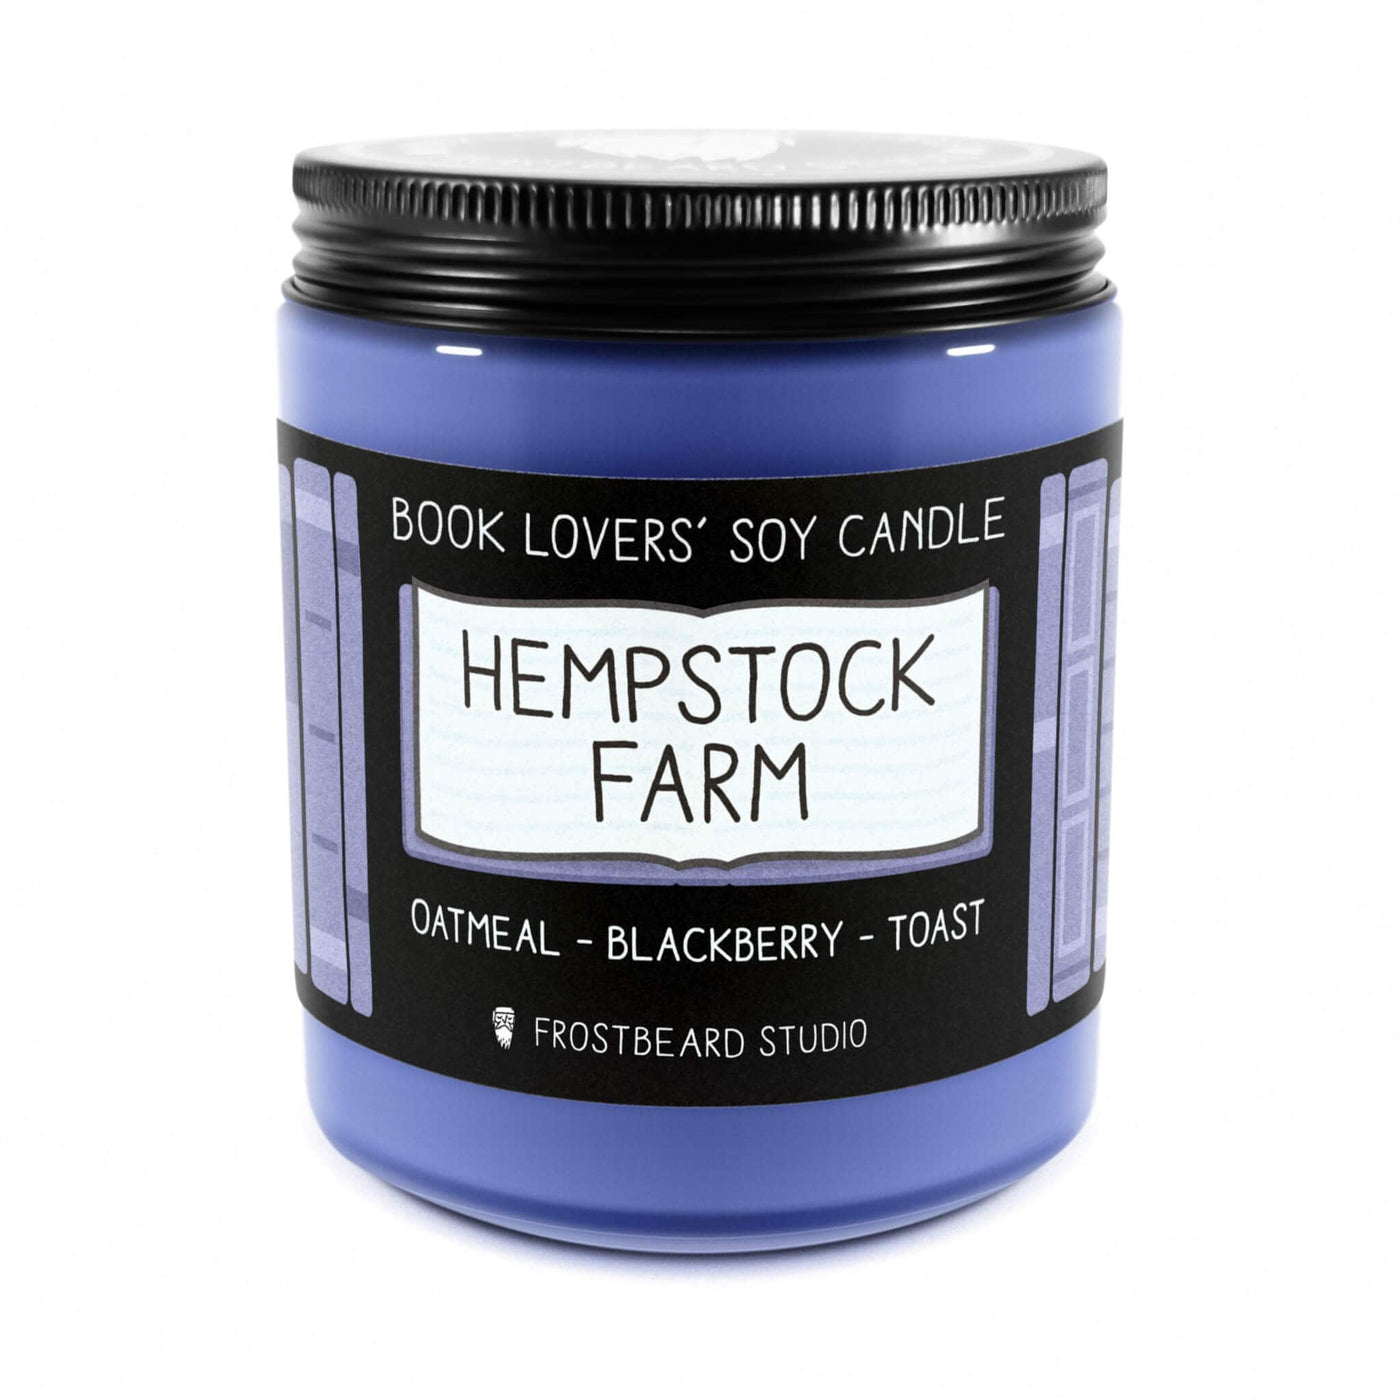 Hempstock Farm  -  8 oz Jar  -  Book Lovers' Soy Candle  -  Frostbeard Studio